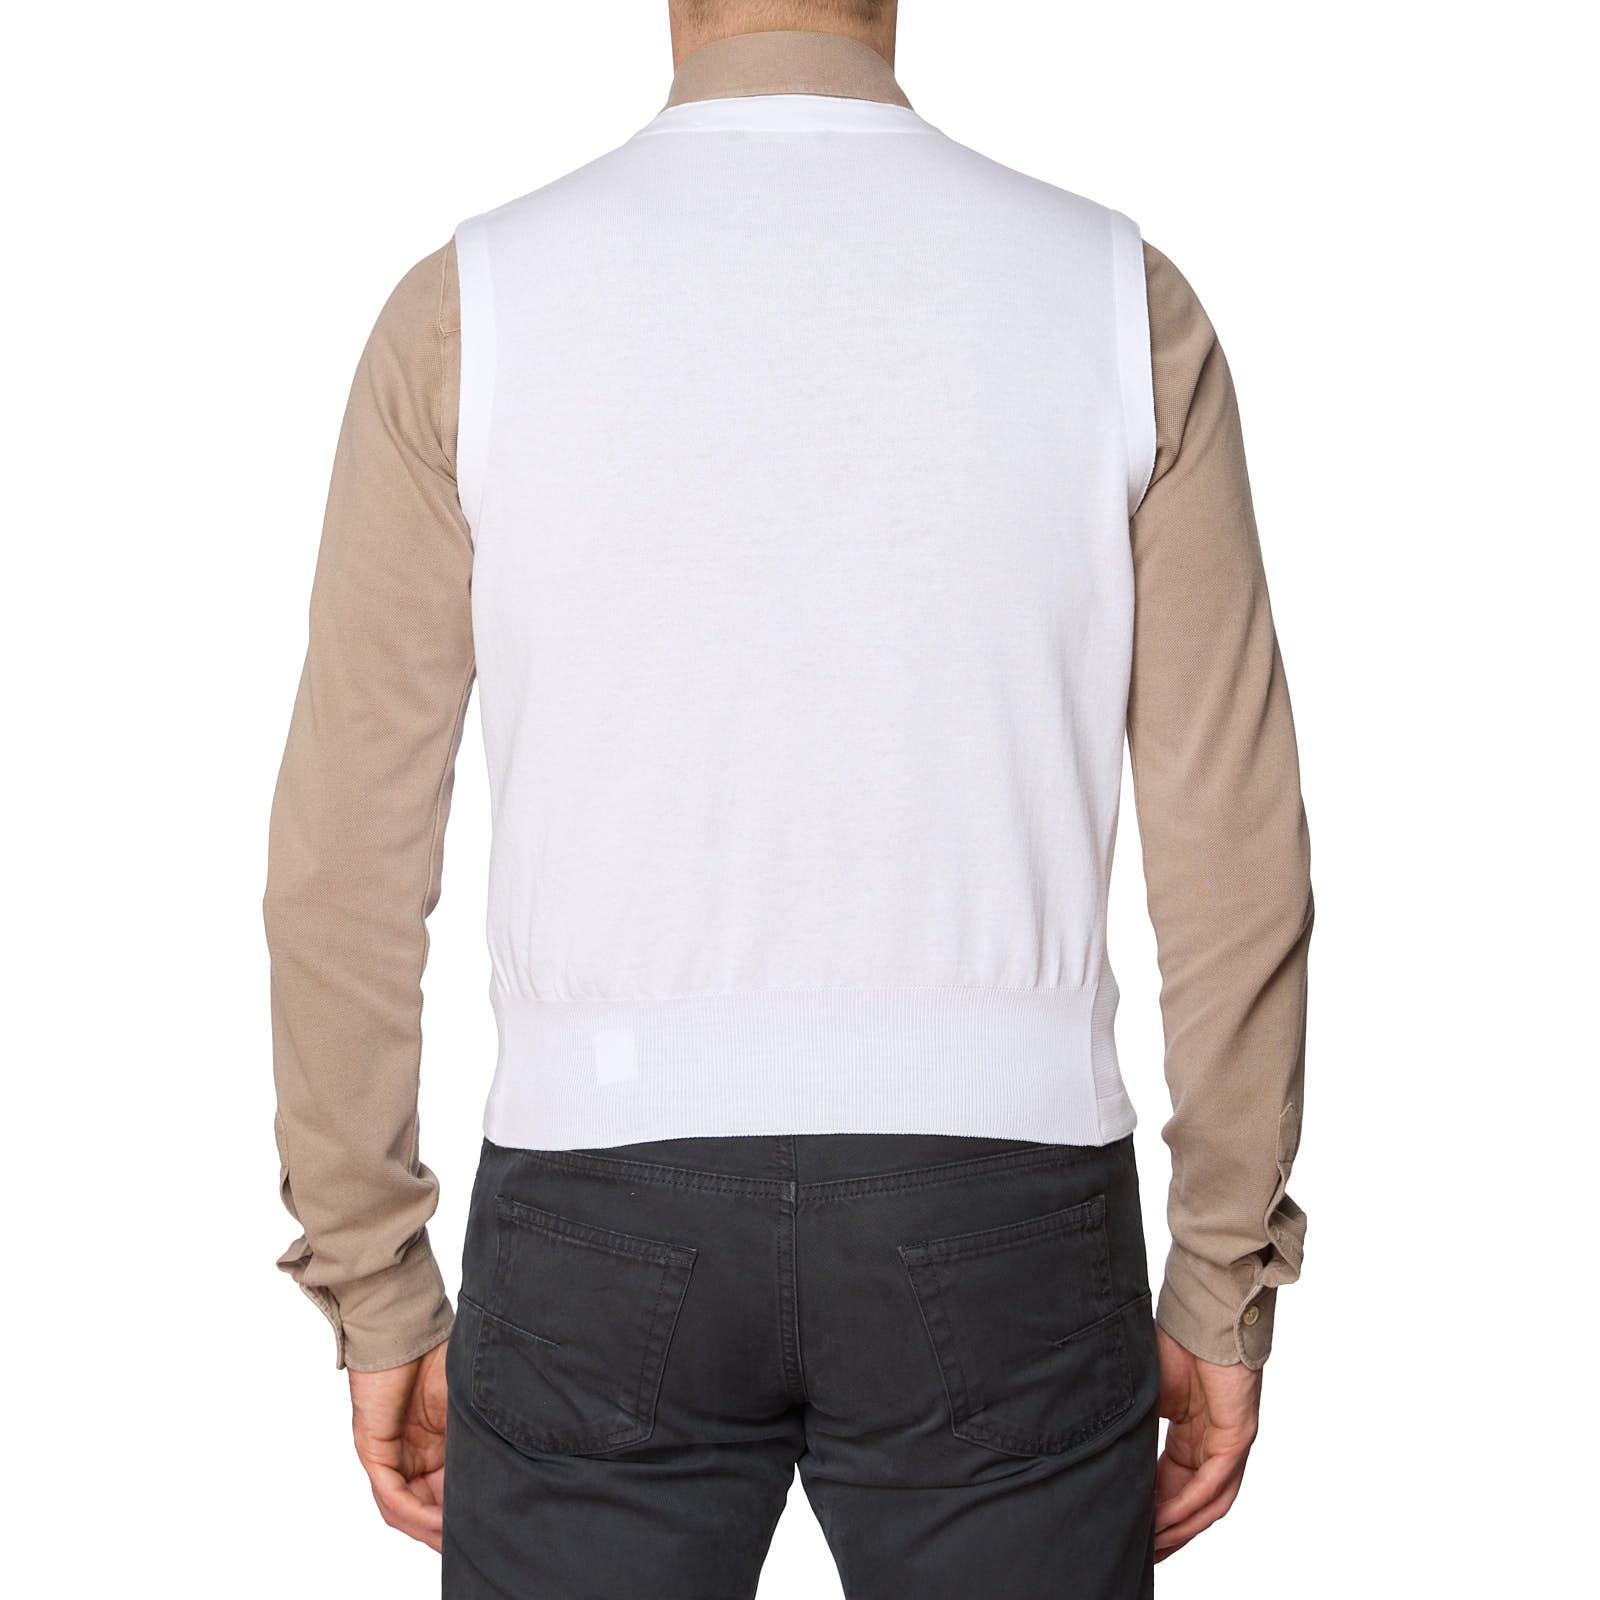 GRAN SASSO for VANNUCCI White Cotton Knit 5 Button Vest Waistcoat NEW